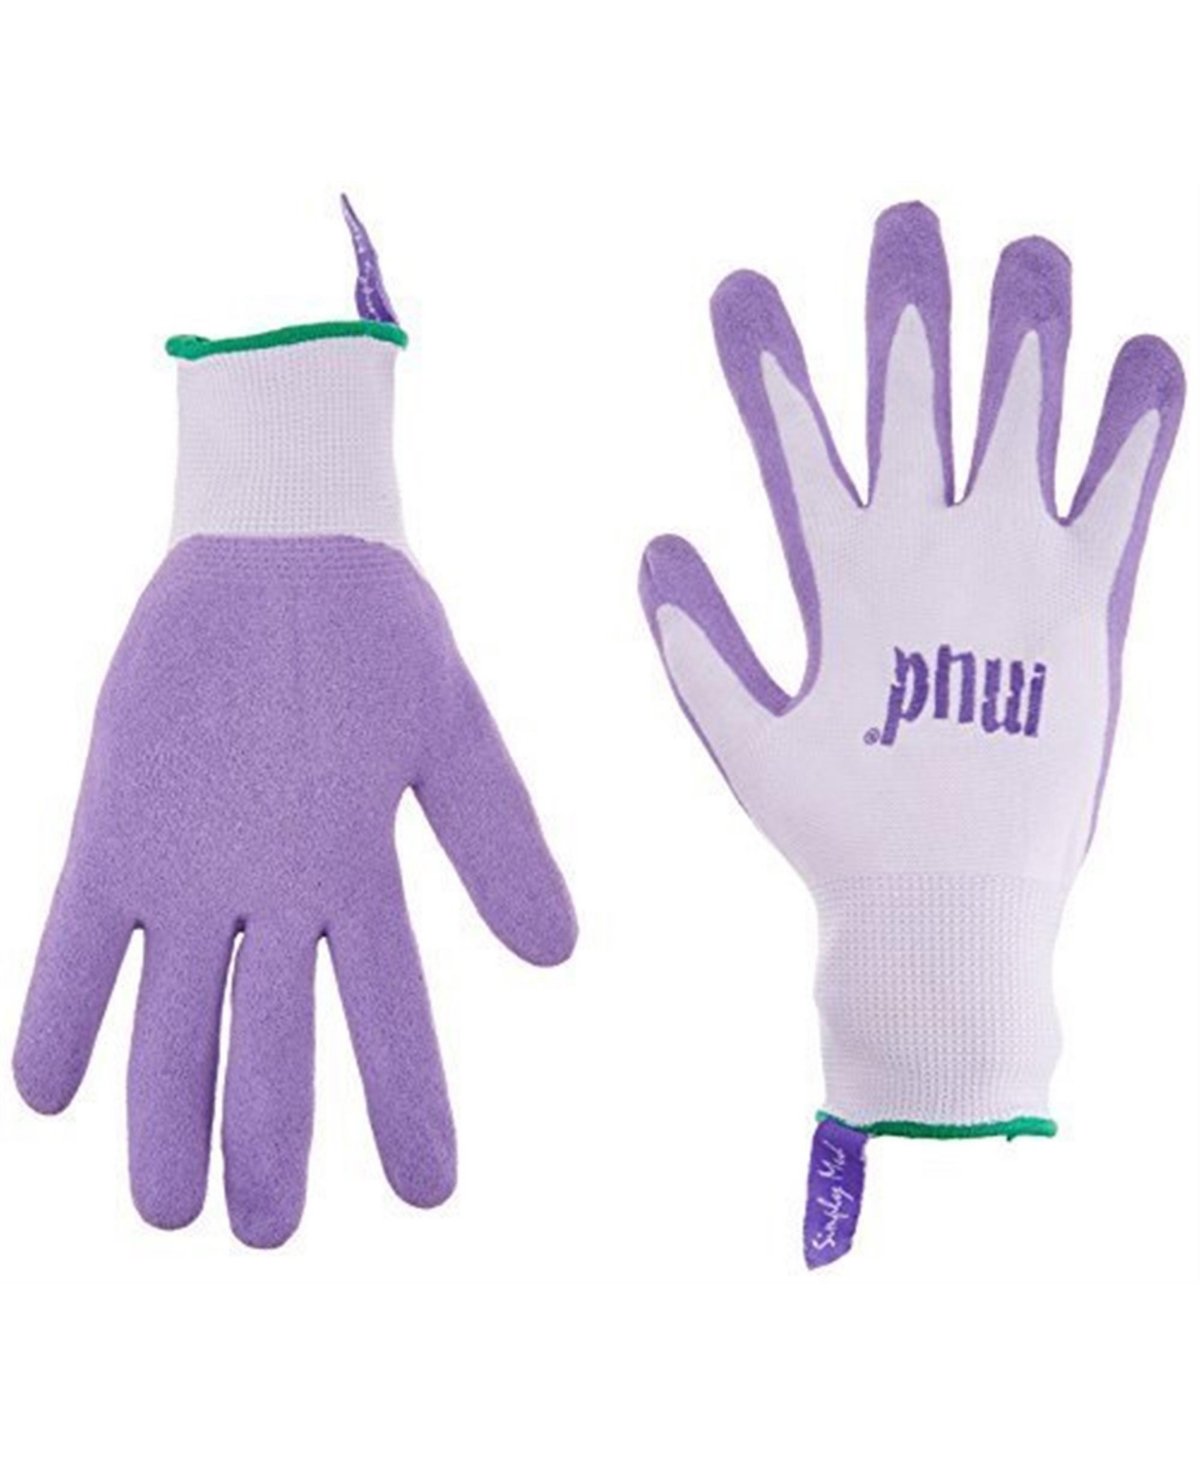 Mud Simply Mud Women's Nylon Garden Gloves, Passion Fruit, Size M - Purple